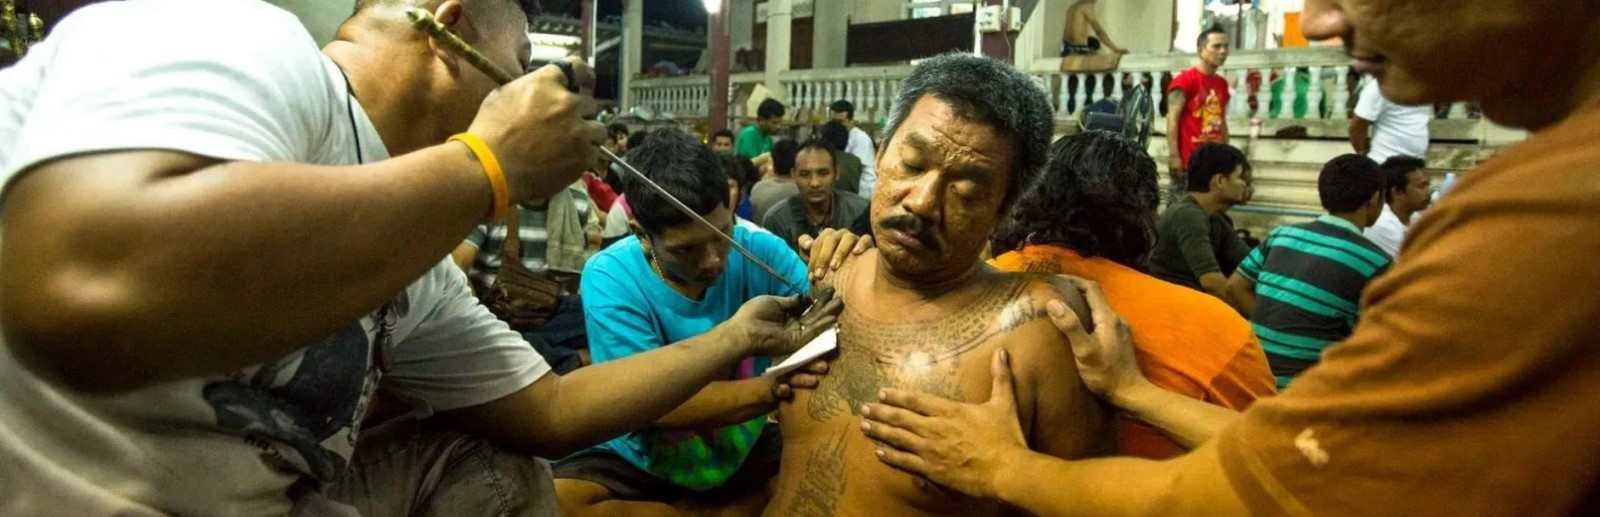 Où se faire tatouer à Bangkok.jpg